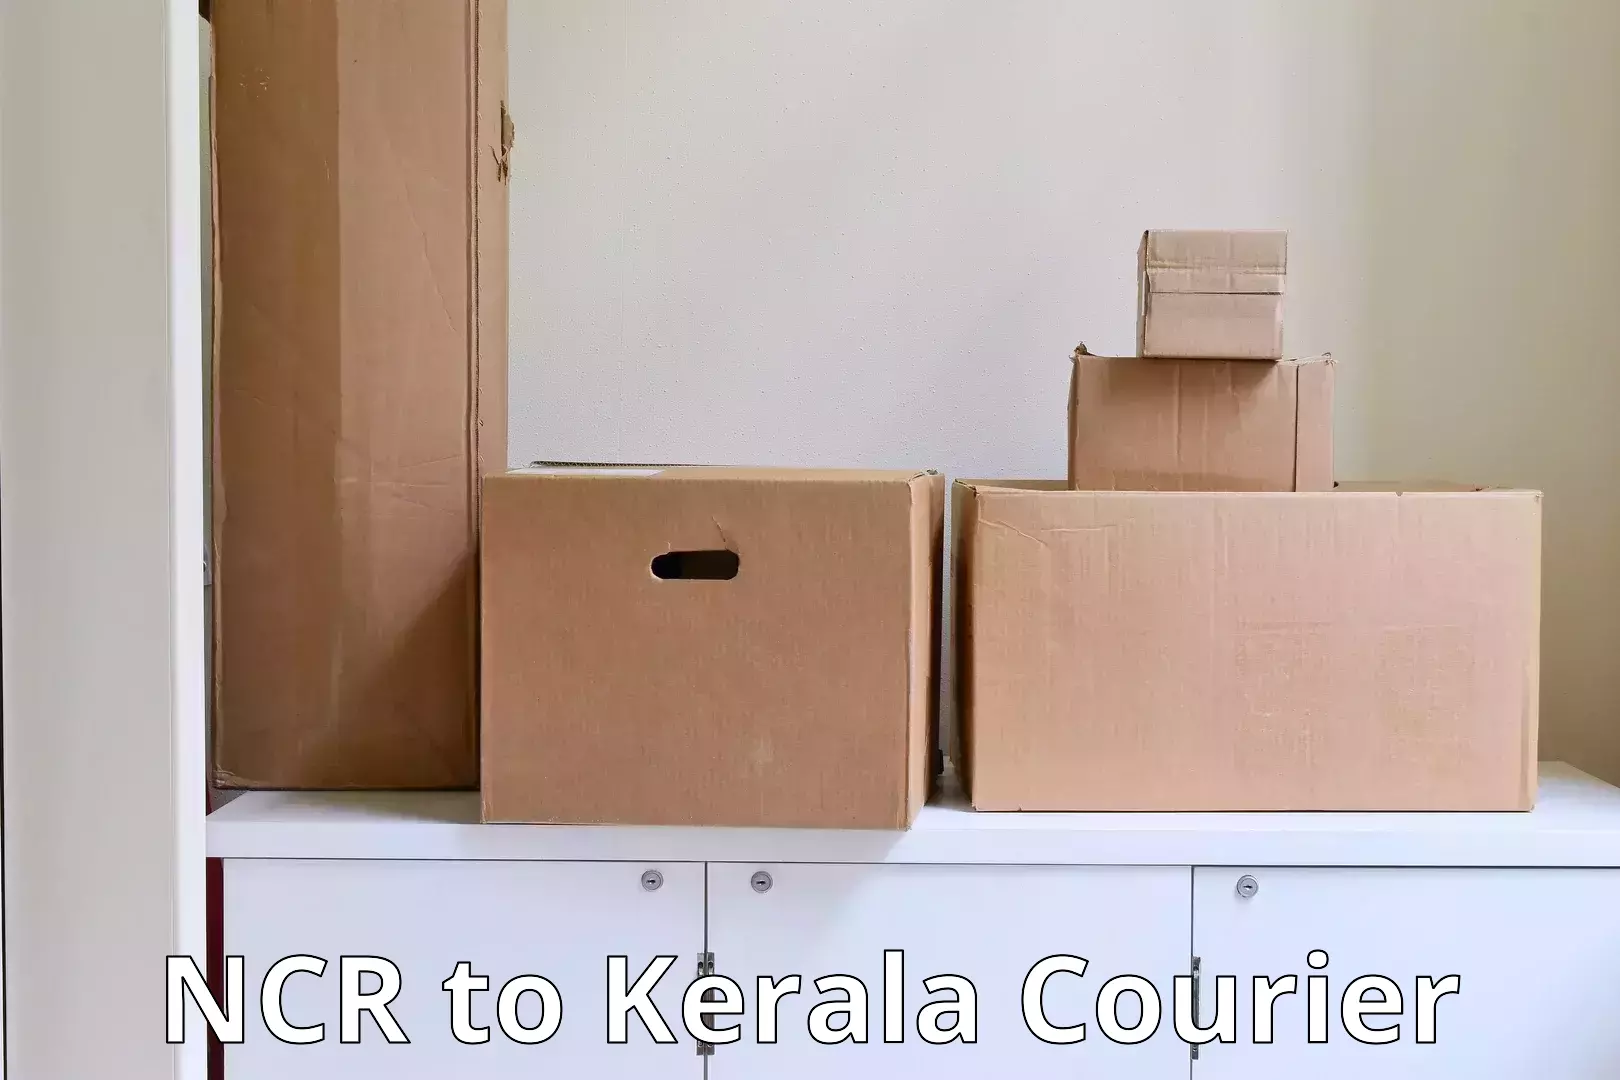 Professional moving company NCR to Kerala